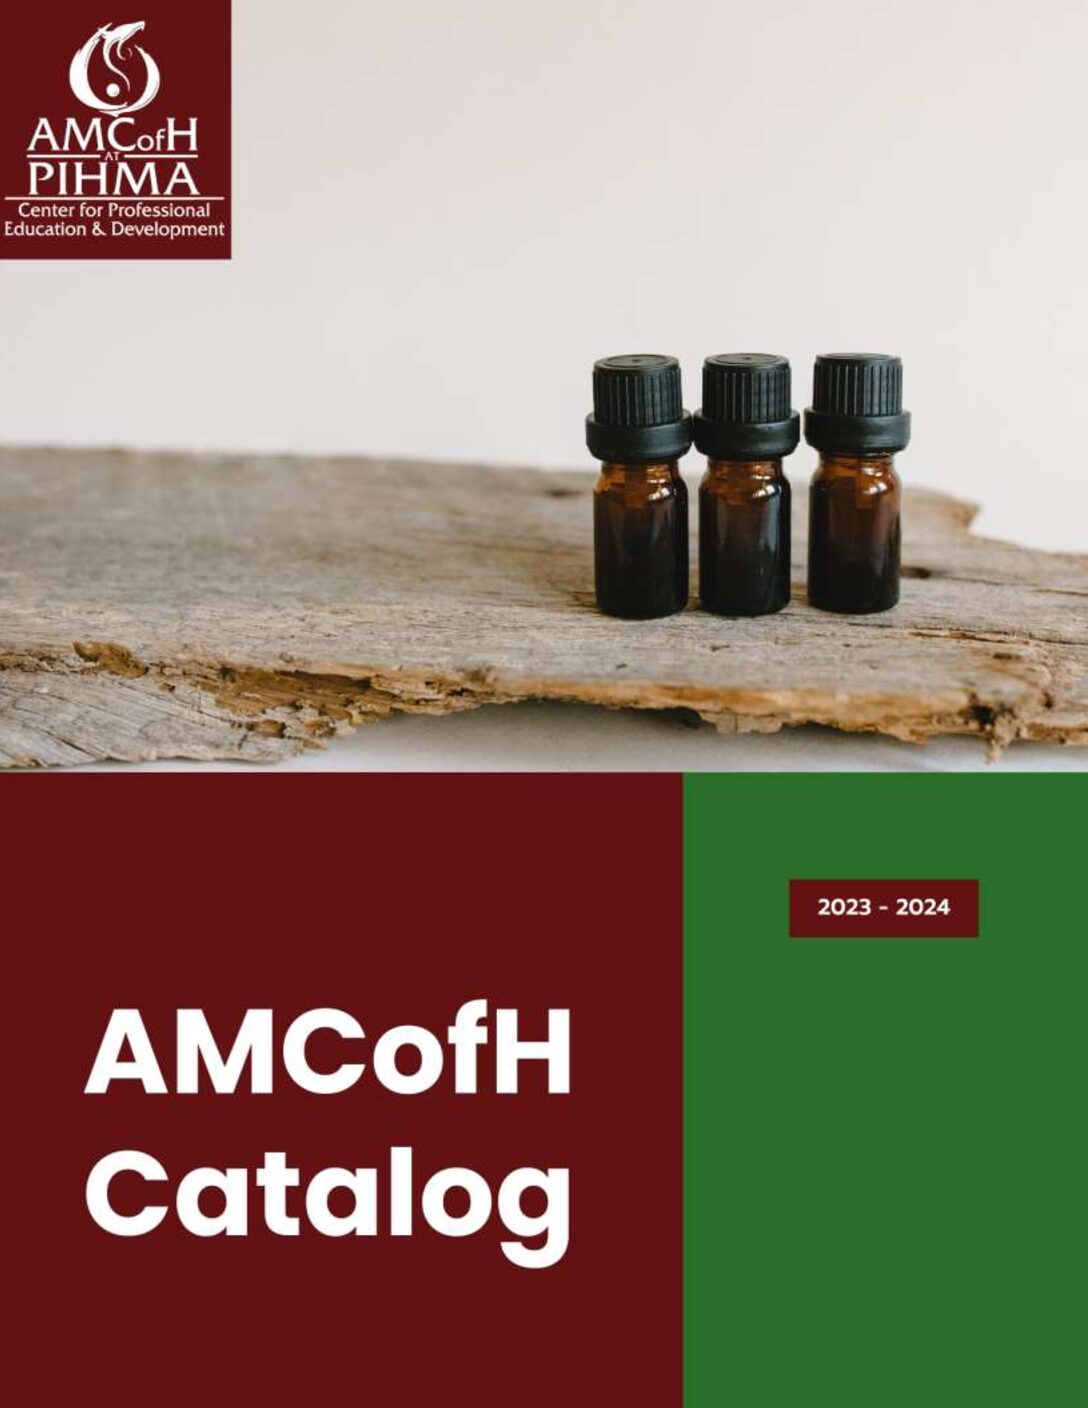 AMCofH Catalog 2023-2024